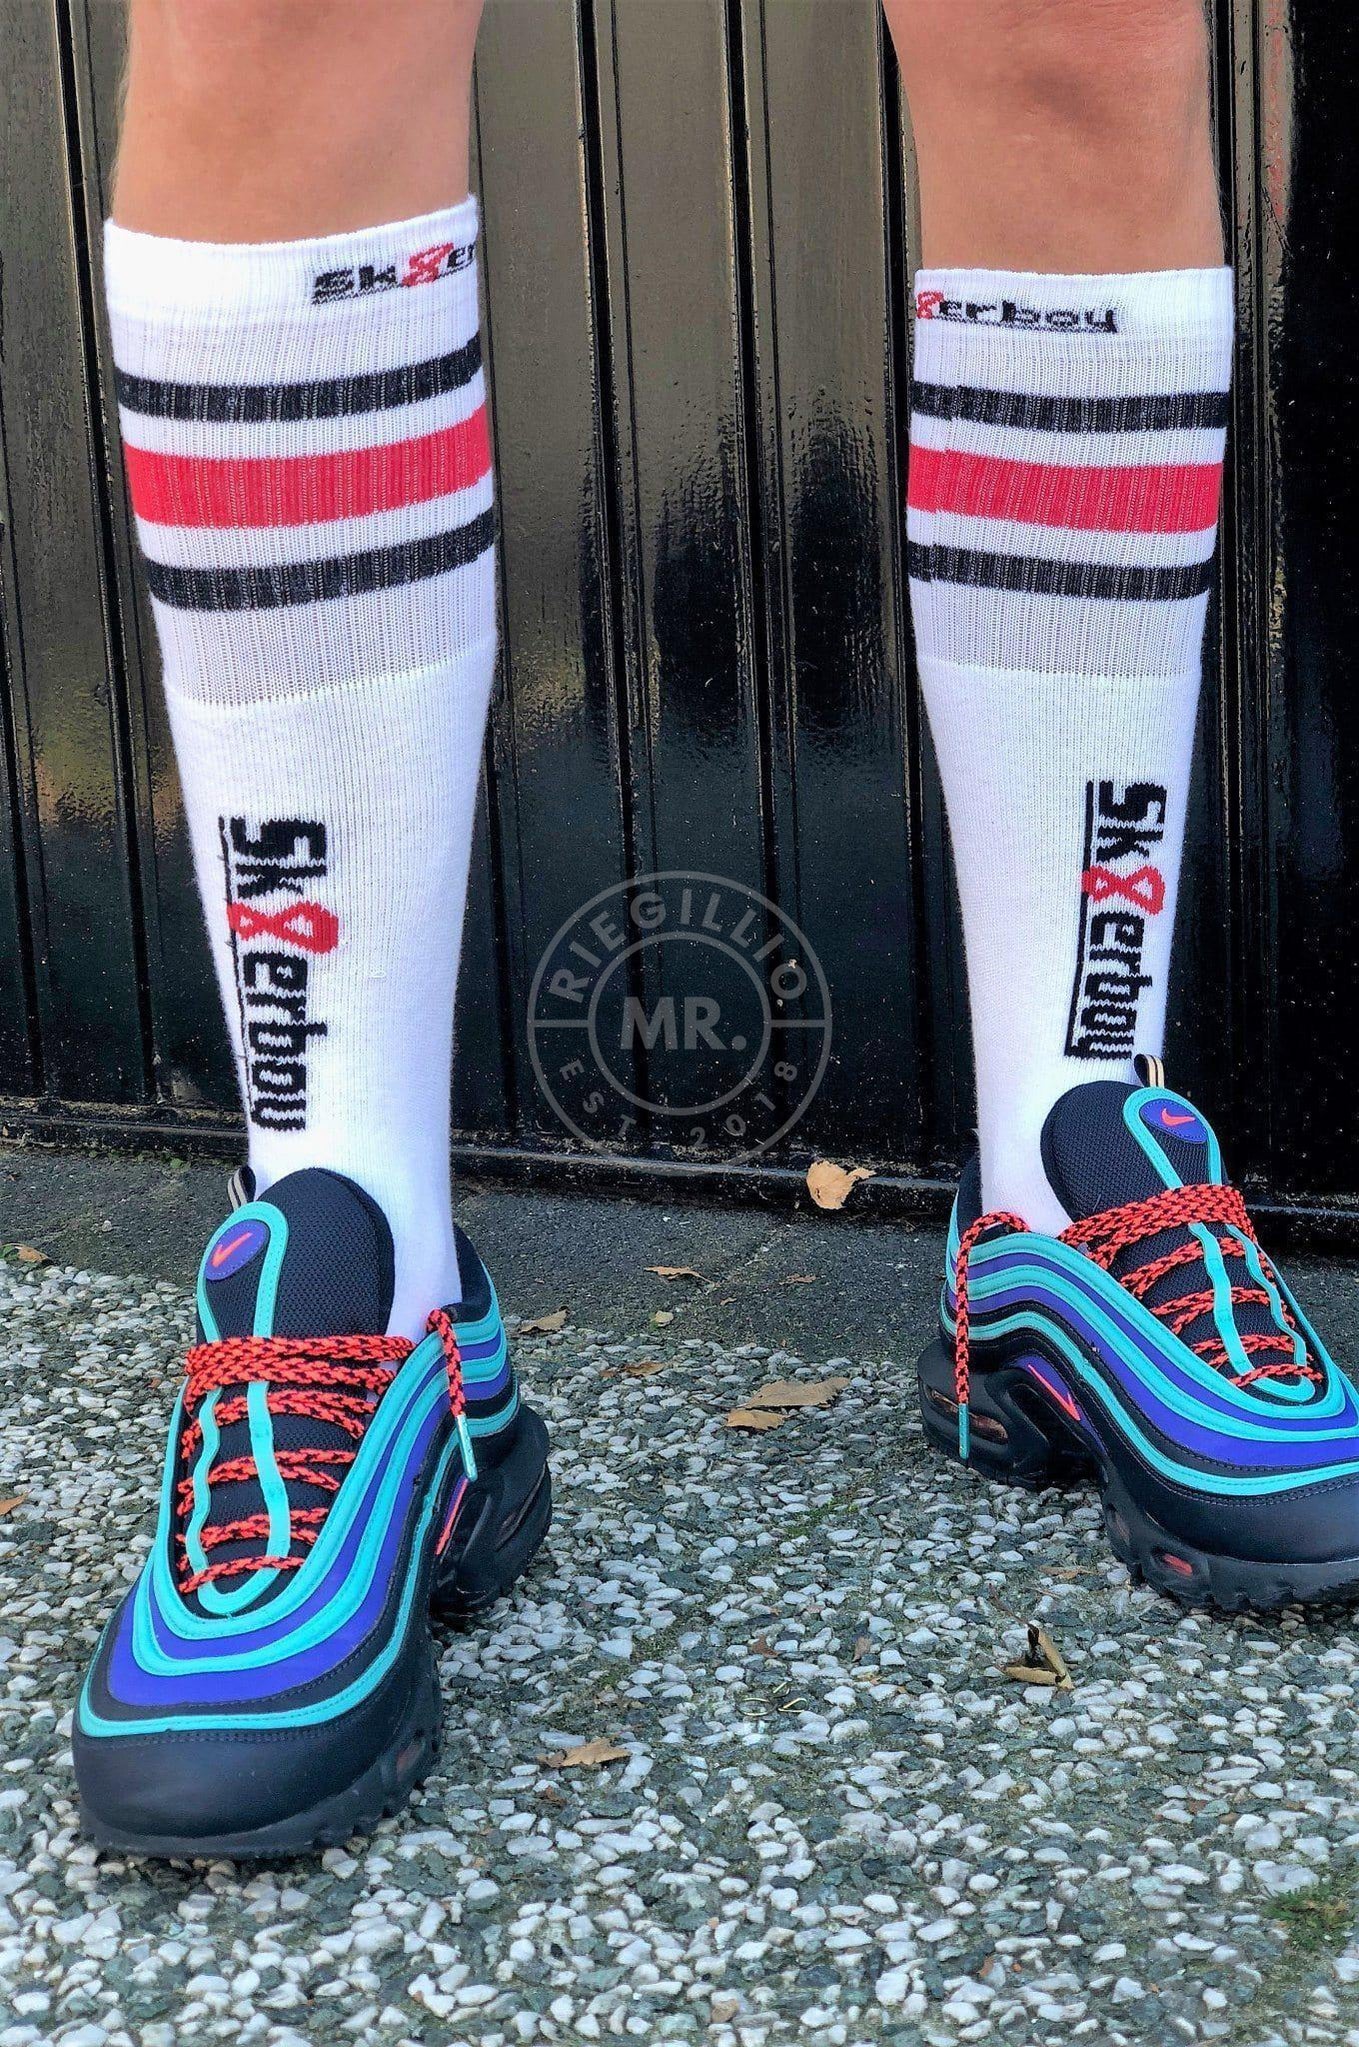 Sk8erboy Tube Socks at MR. Riegillio